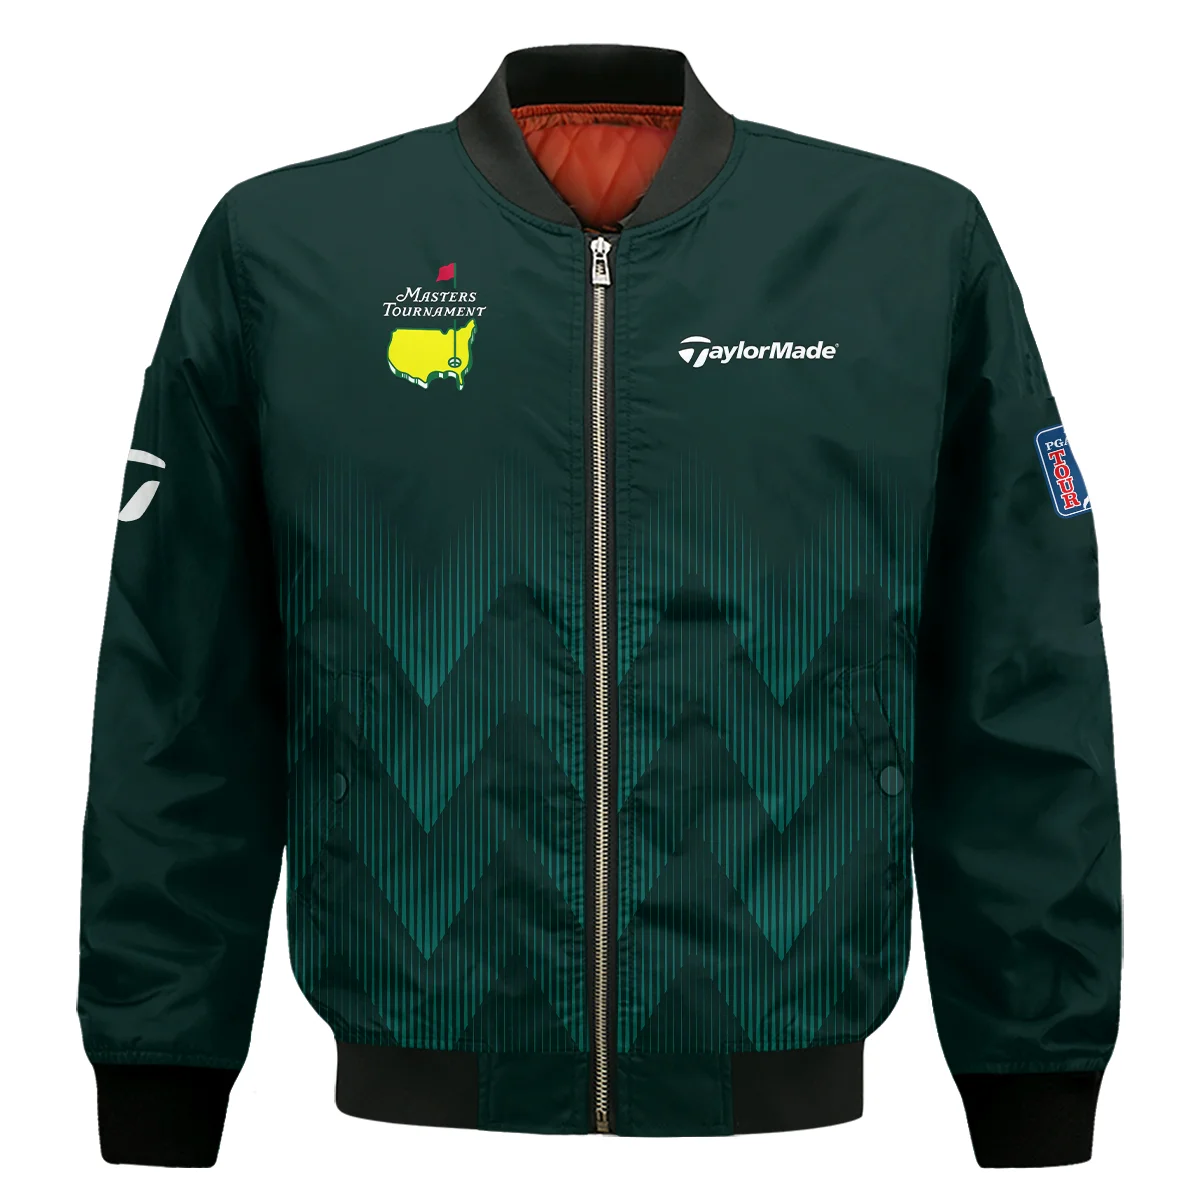 Masters Tournament Golf Taylor Made Bomber Jacket Zigzag Pattern Dark Green Golf Sports Bomber Jacket GBJ1310